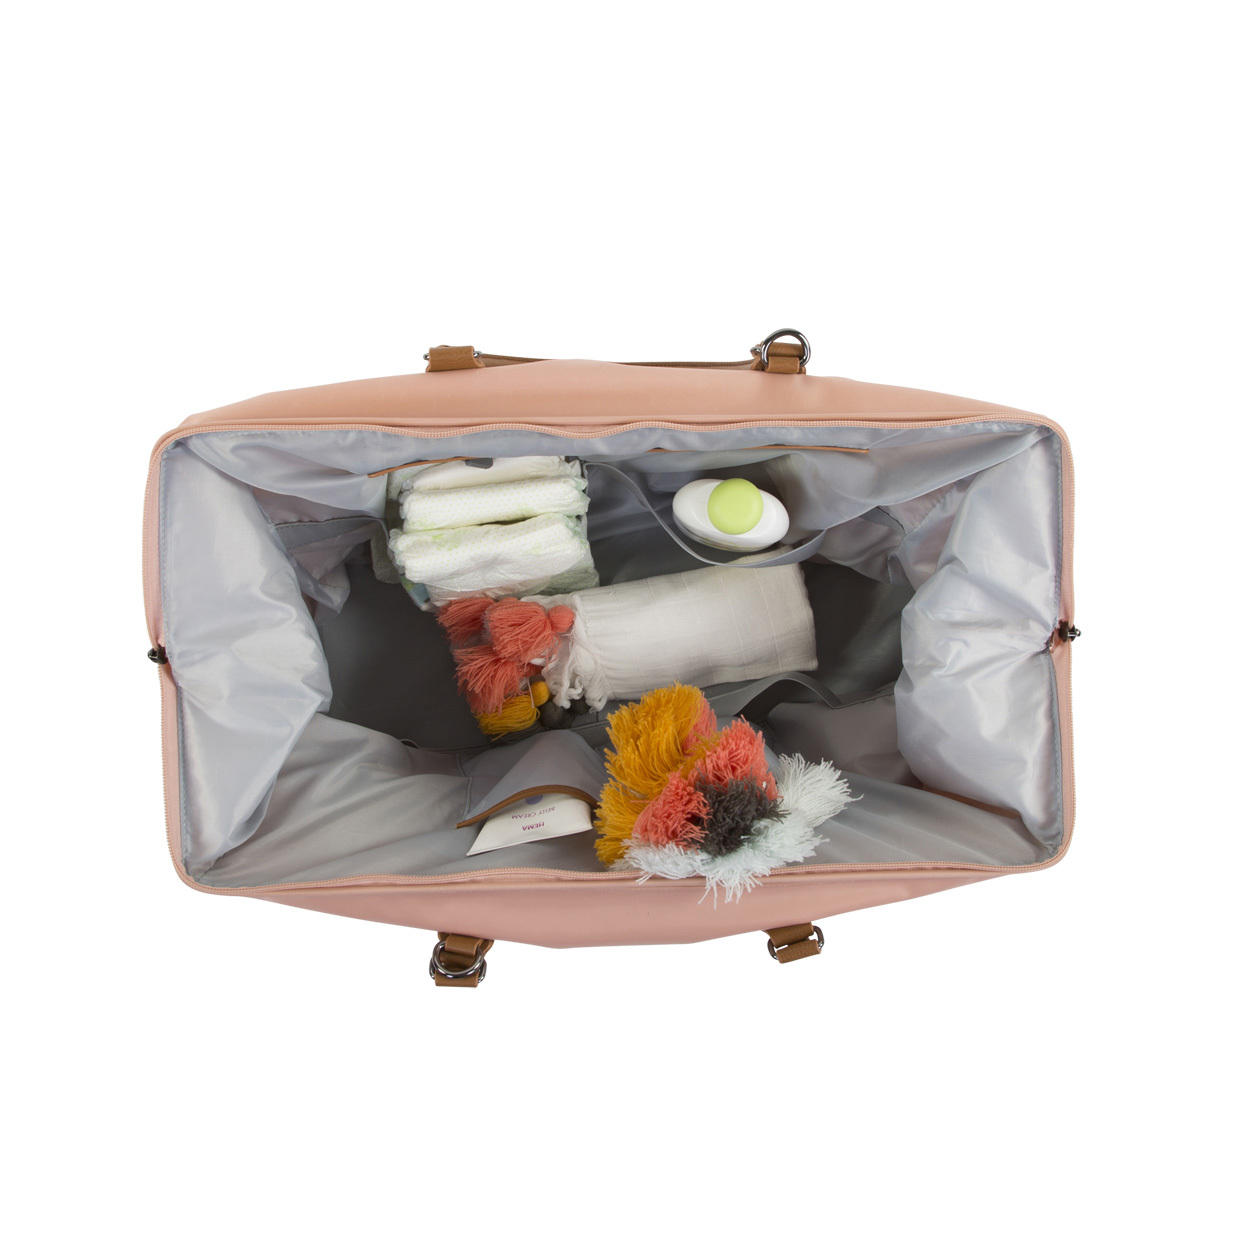 WICKELTASCHE  Childhome Mommy Bag   - Pink/Grau, Basics, Textil (30/55/40cm) - Childhome